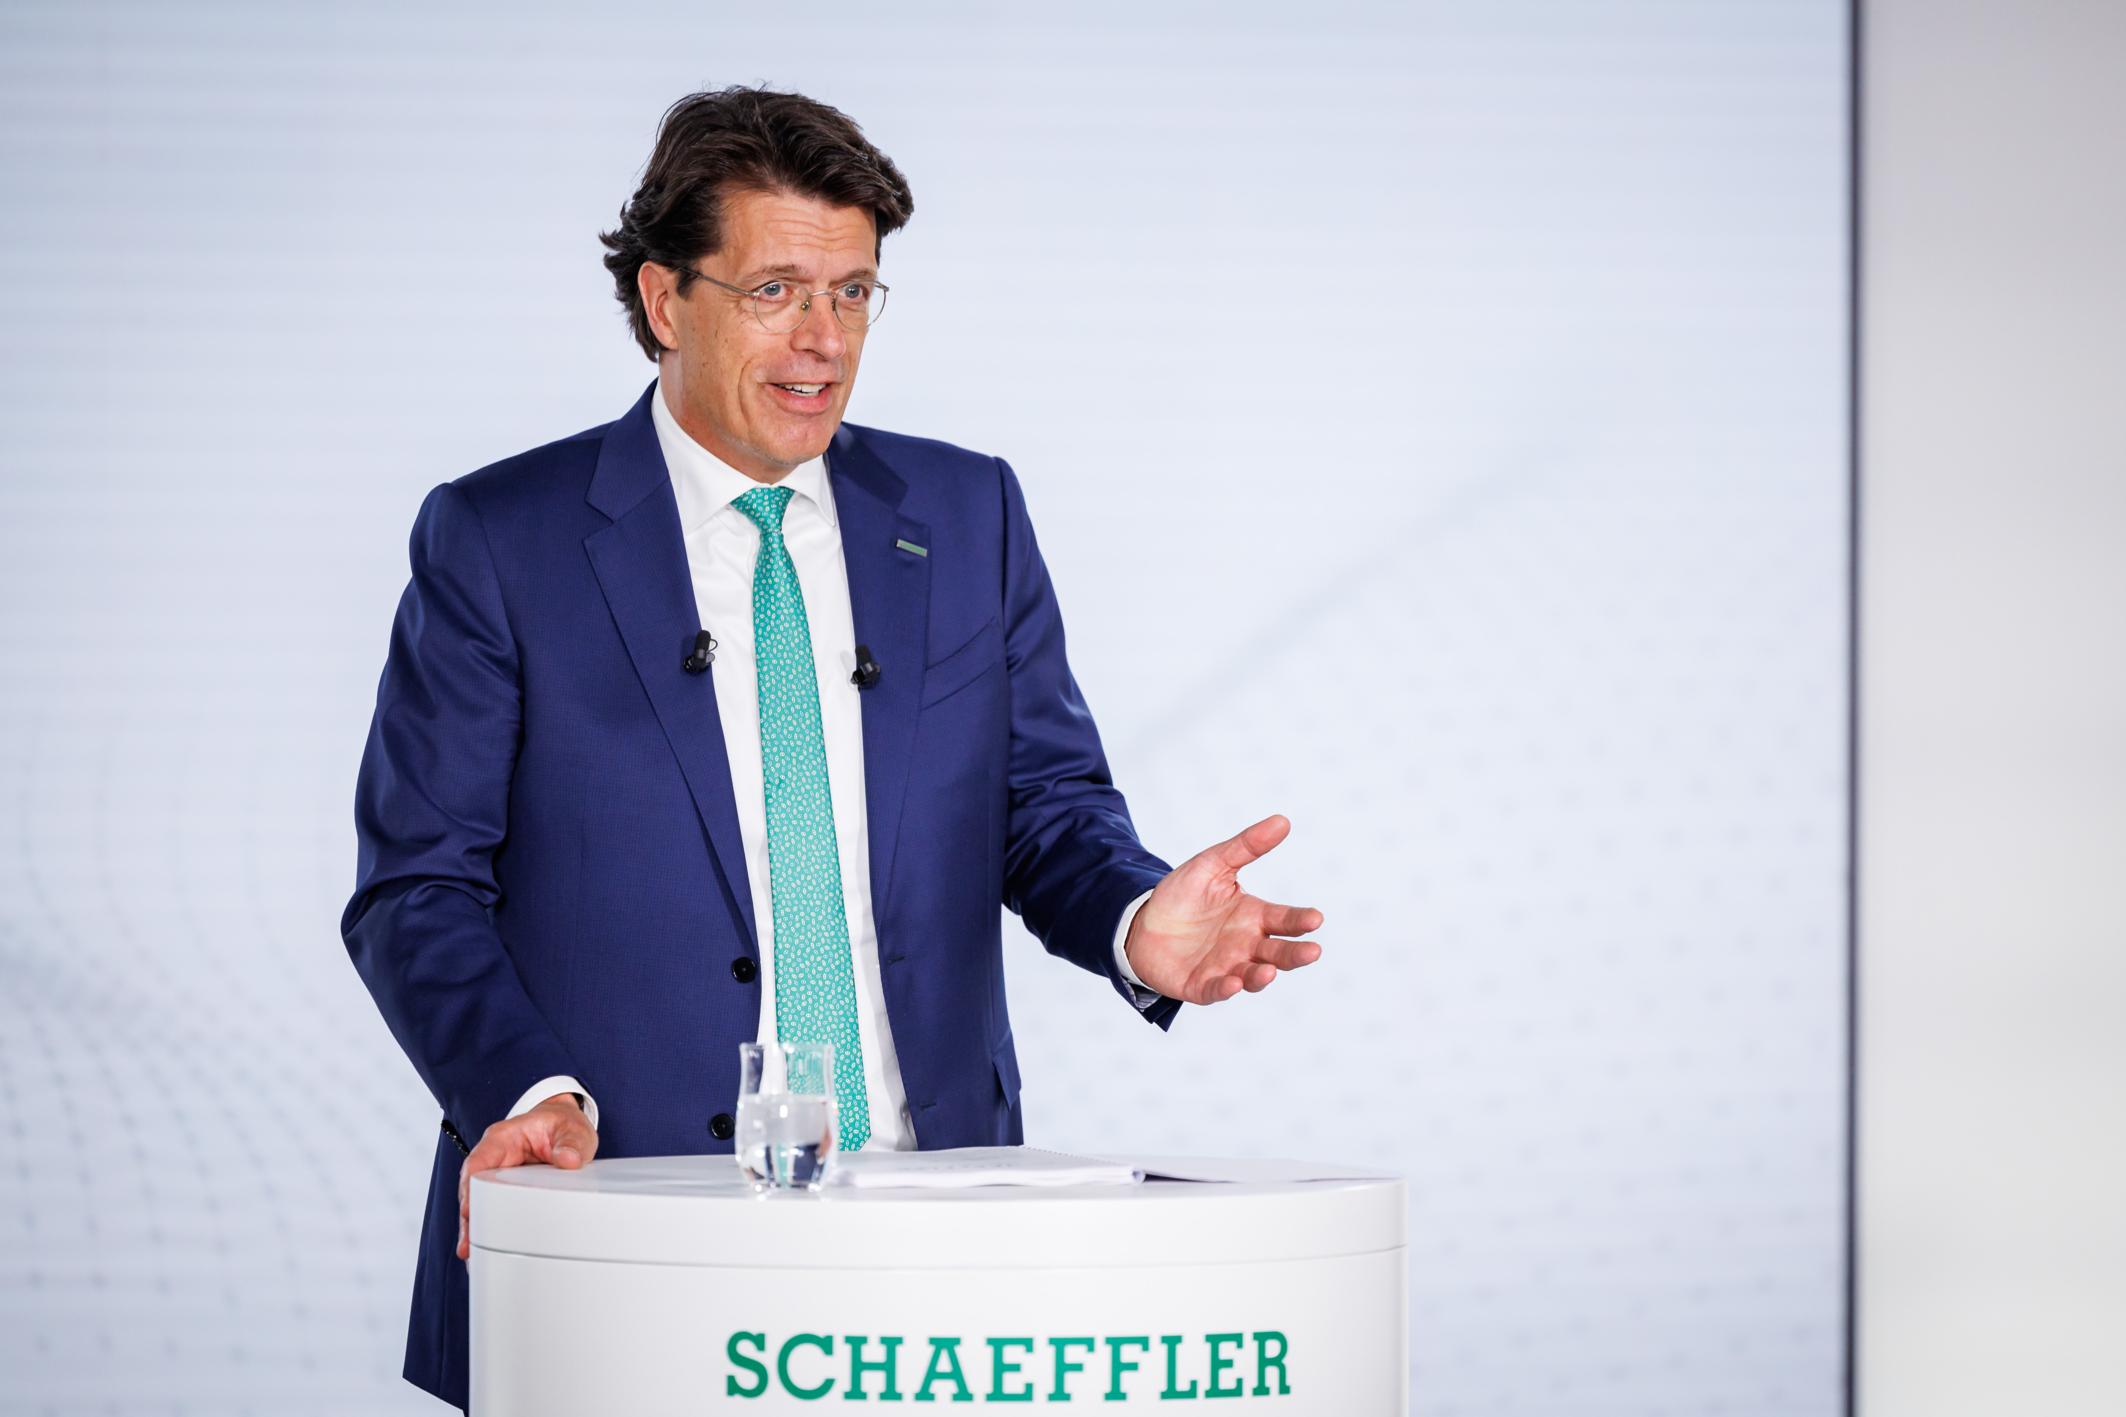 Annual General Meeting of Schaeffler approves merger of Vitesco Technologies Group Aktiengesellschaft into Schaeffler AG